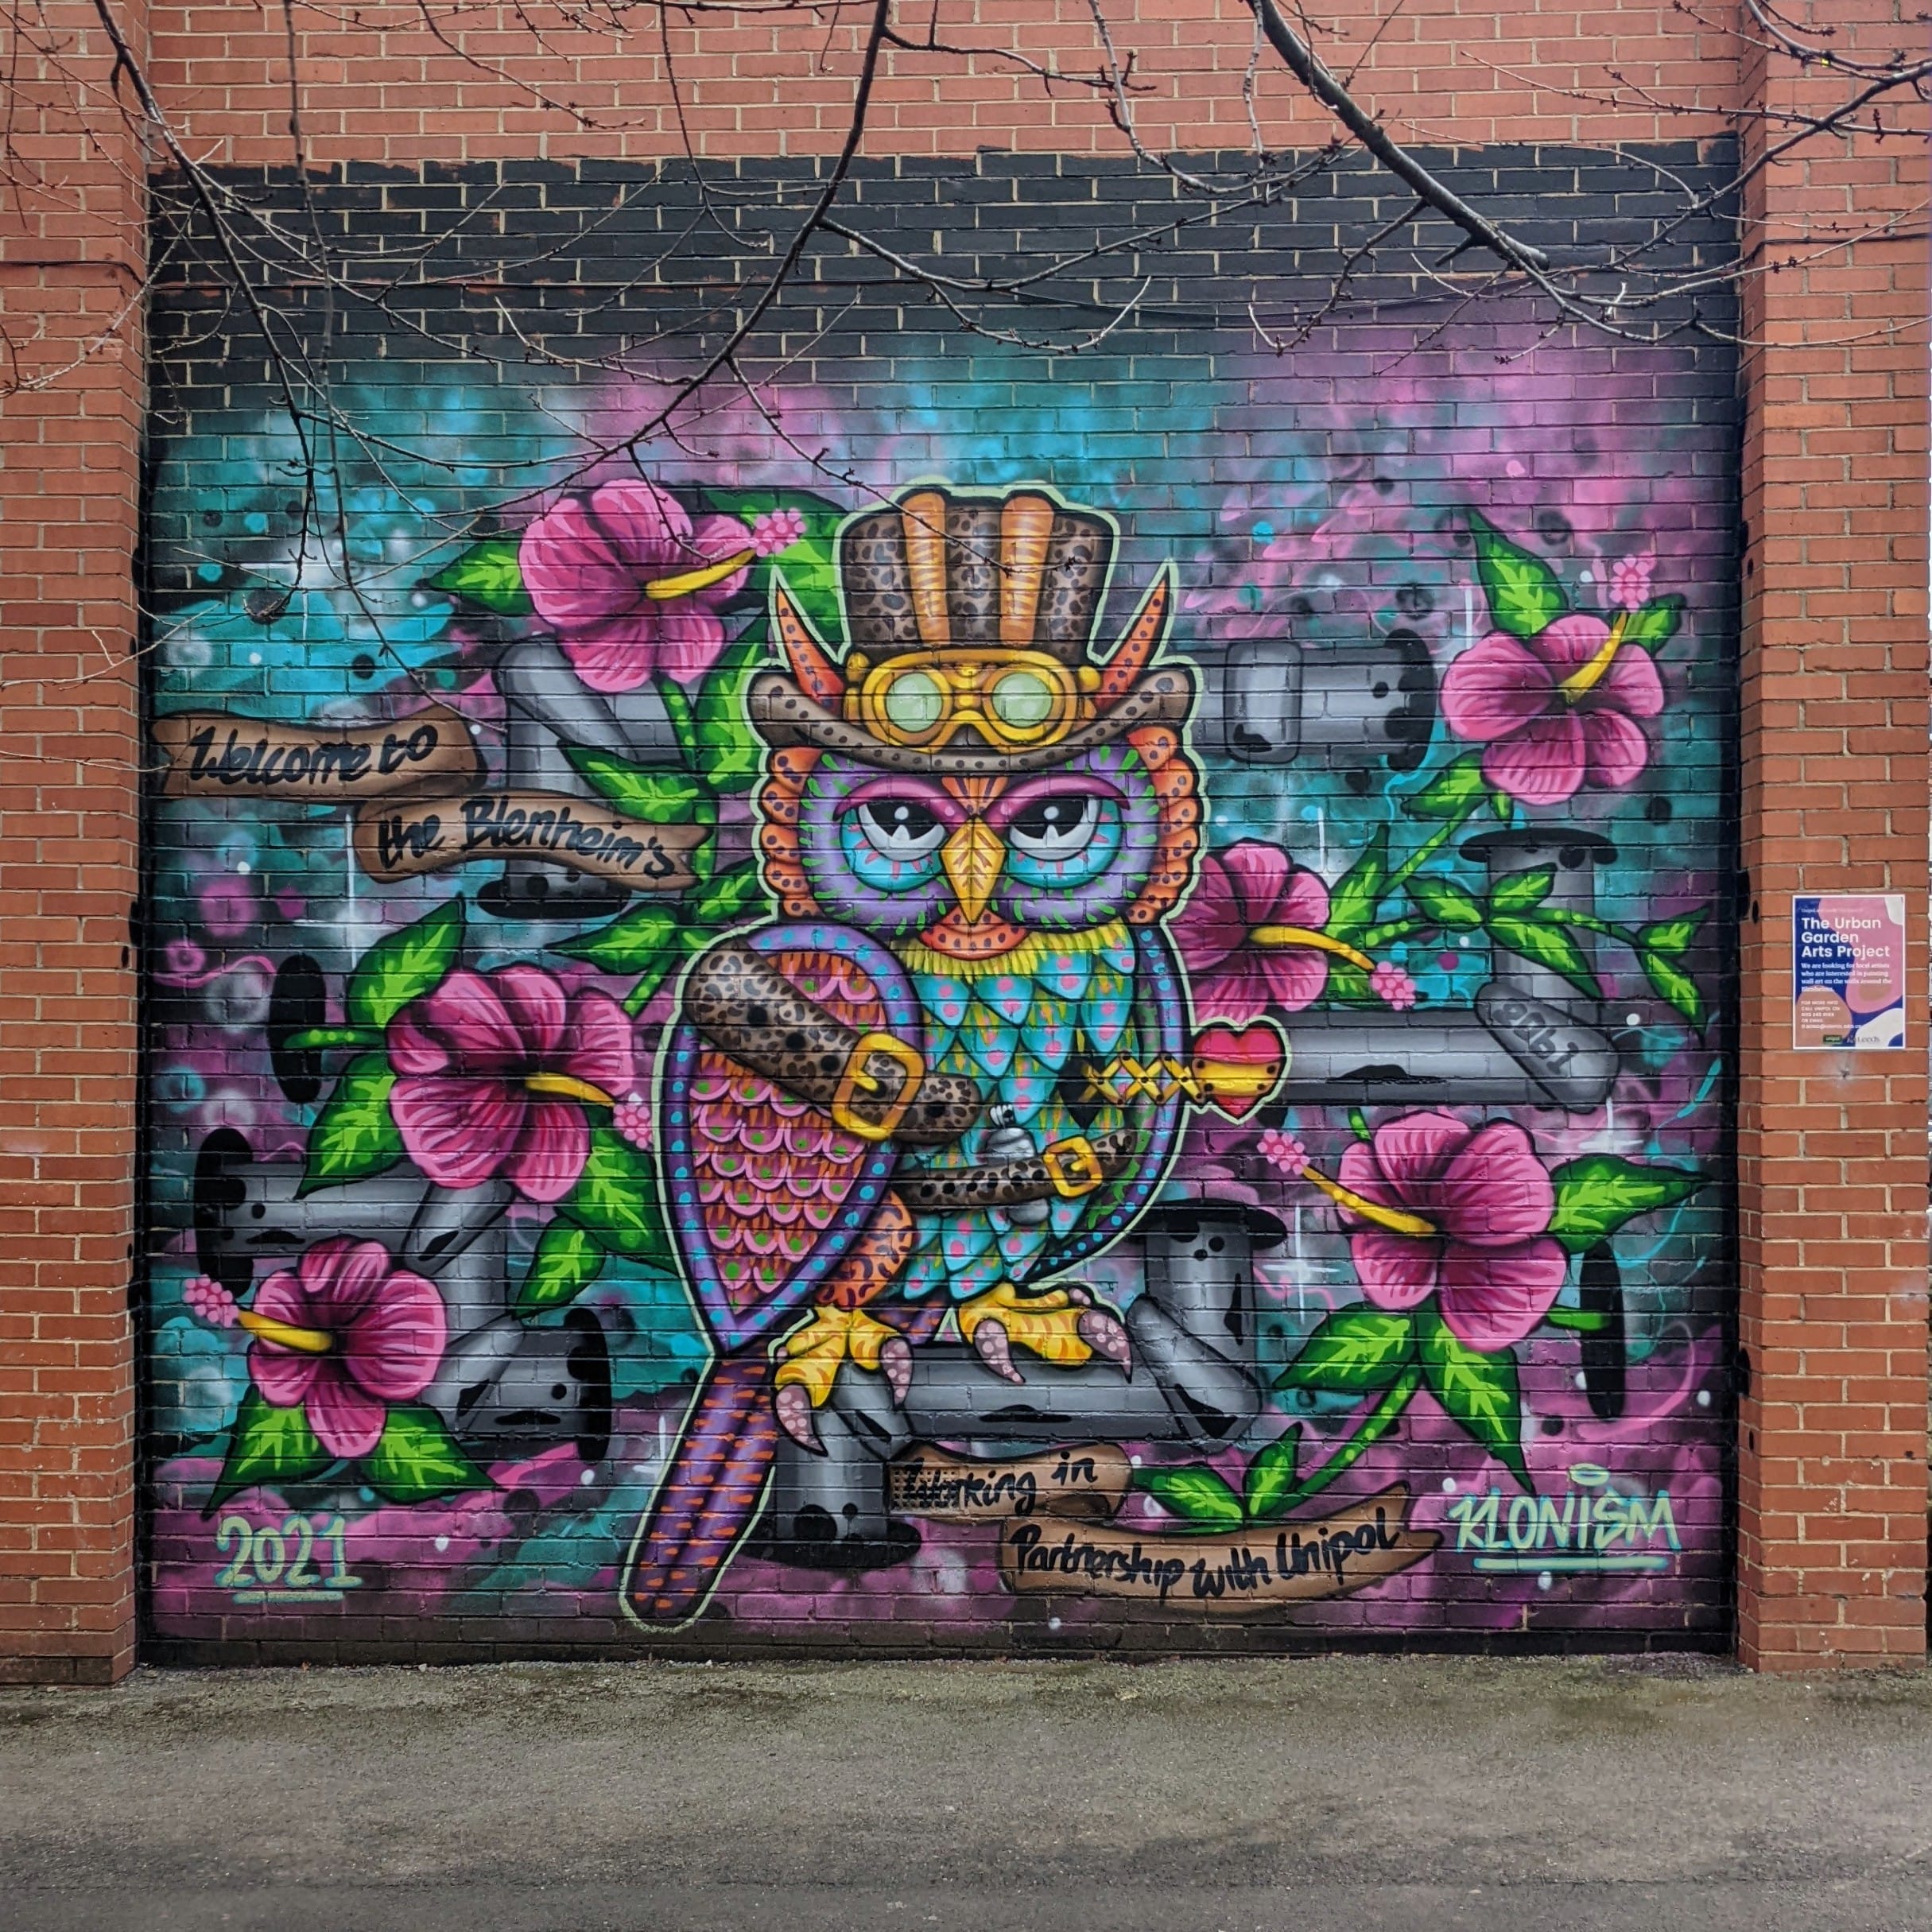 Graffiti 5517 Blenheim de Klonism capturé par Igor à Leeds United Kingdom